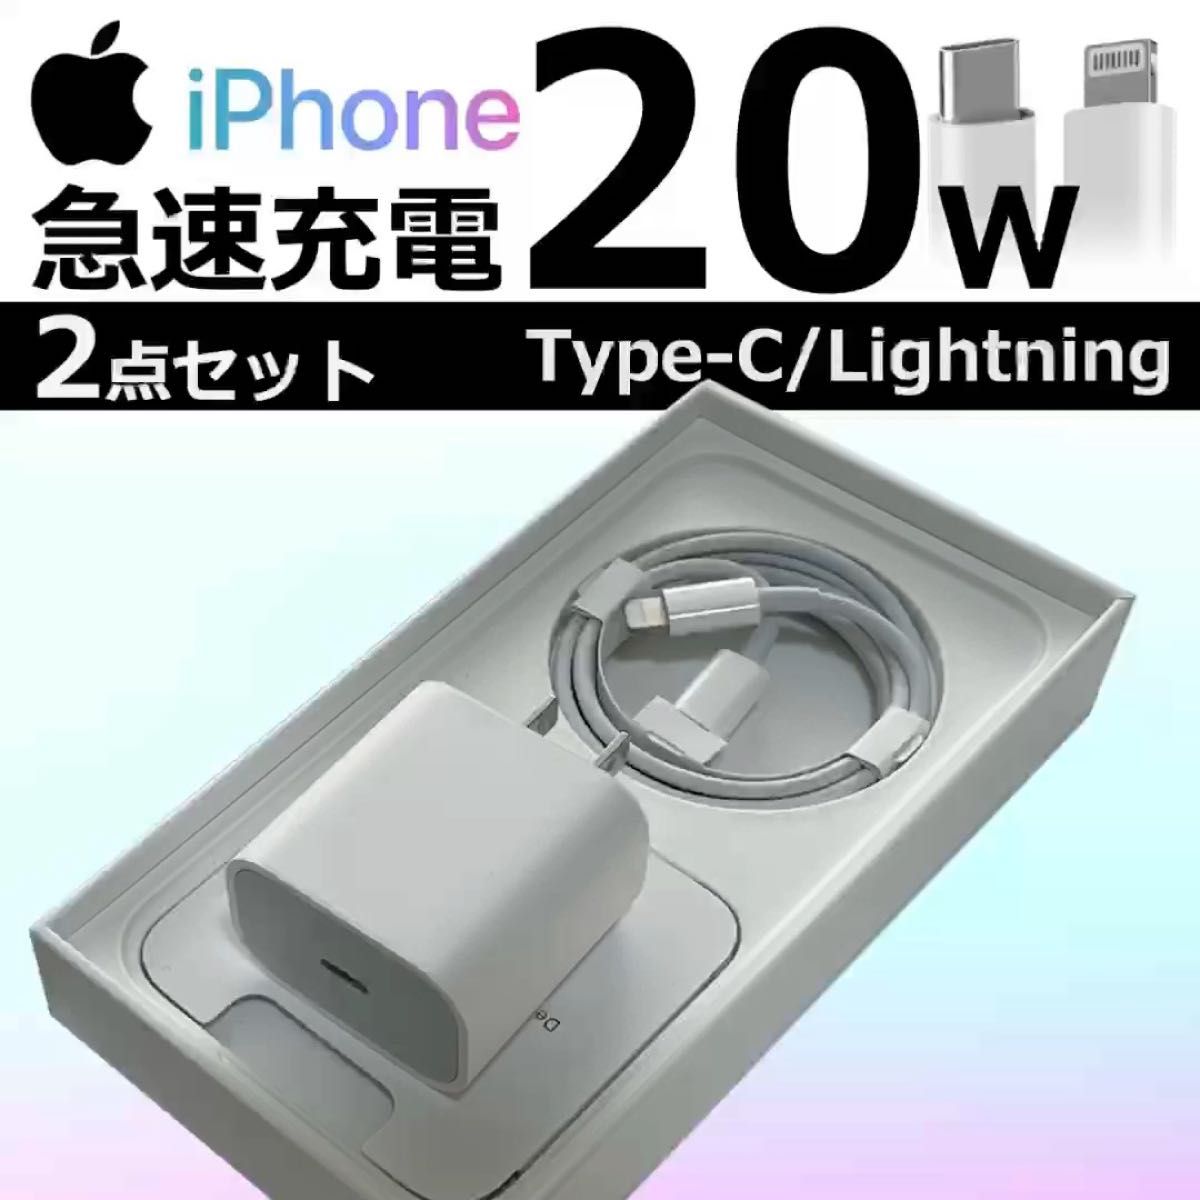 iPhone Type-C 20W lightning cable ライトニングケーブル 急速充電 高速充電 データ転送